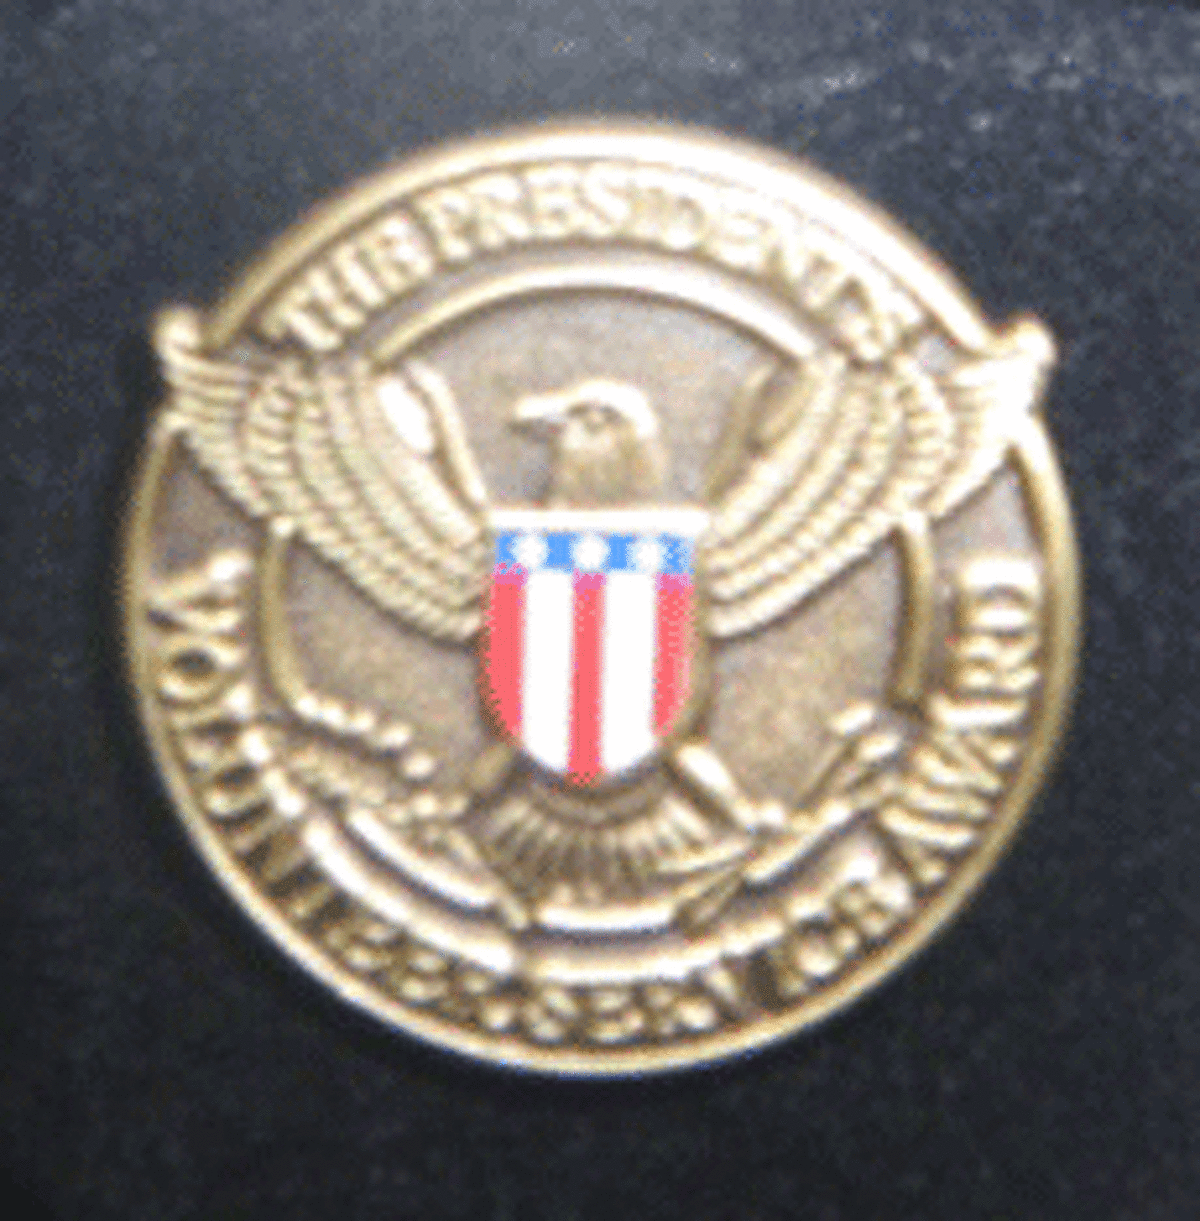 The President’s Volunteer Service Award pin received by Bryce Bliska.